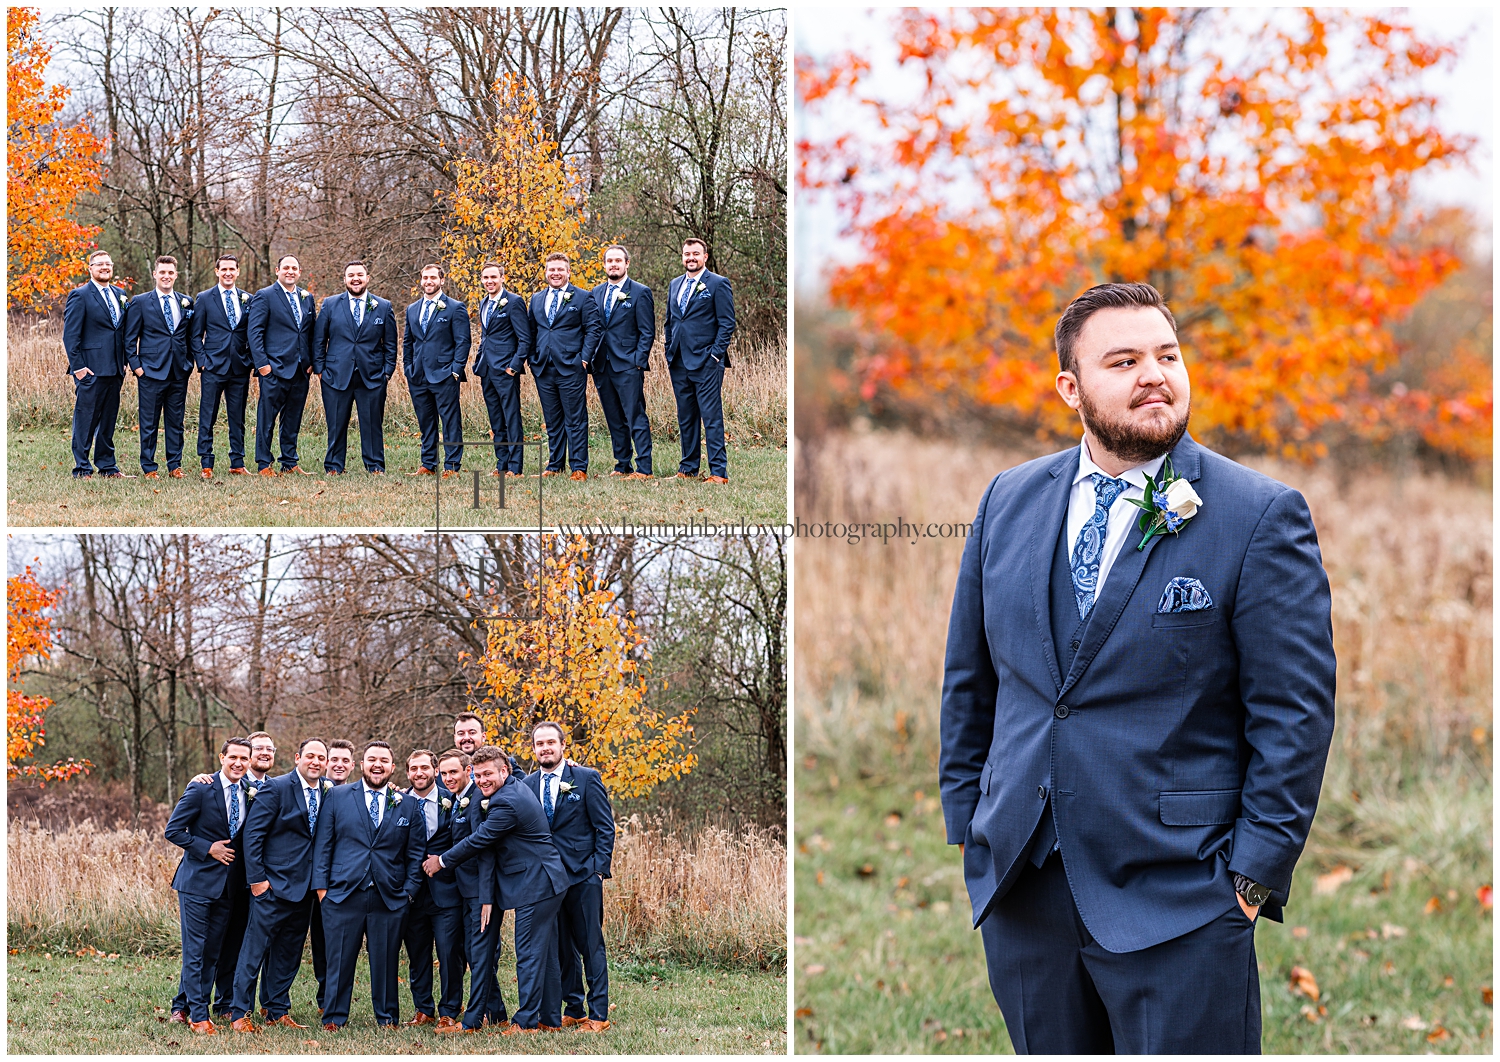 Fall wedding photos with groom and groomsmen wearing navy